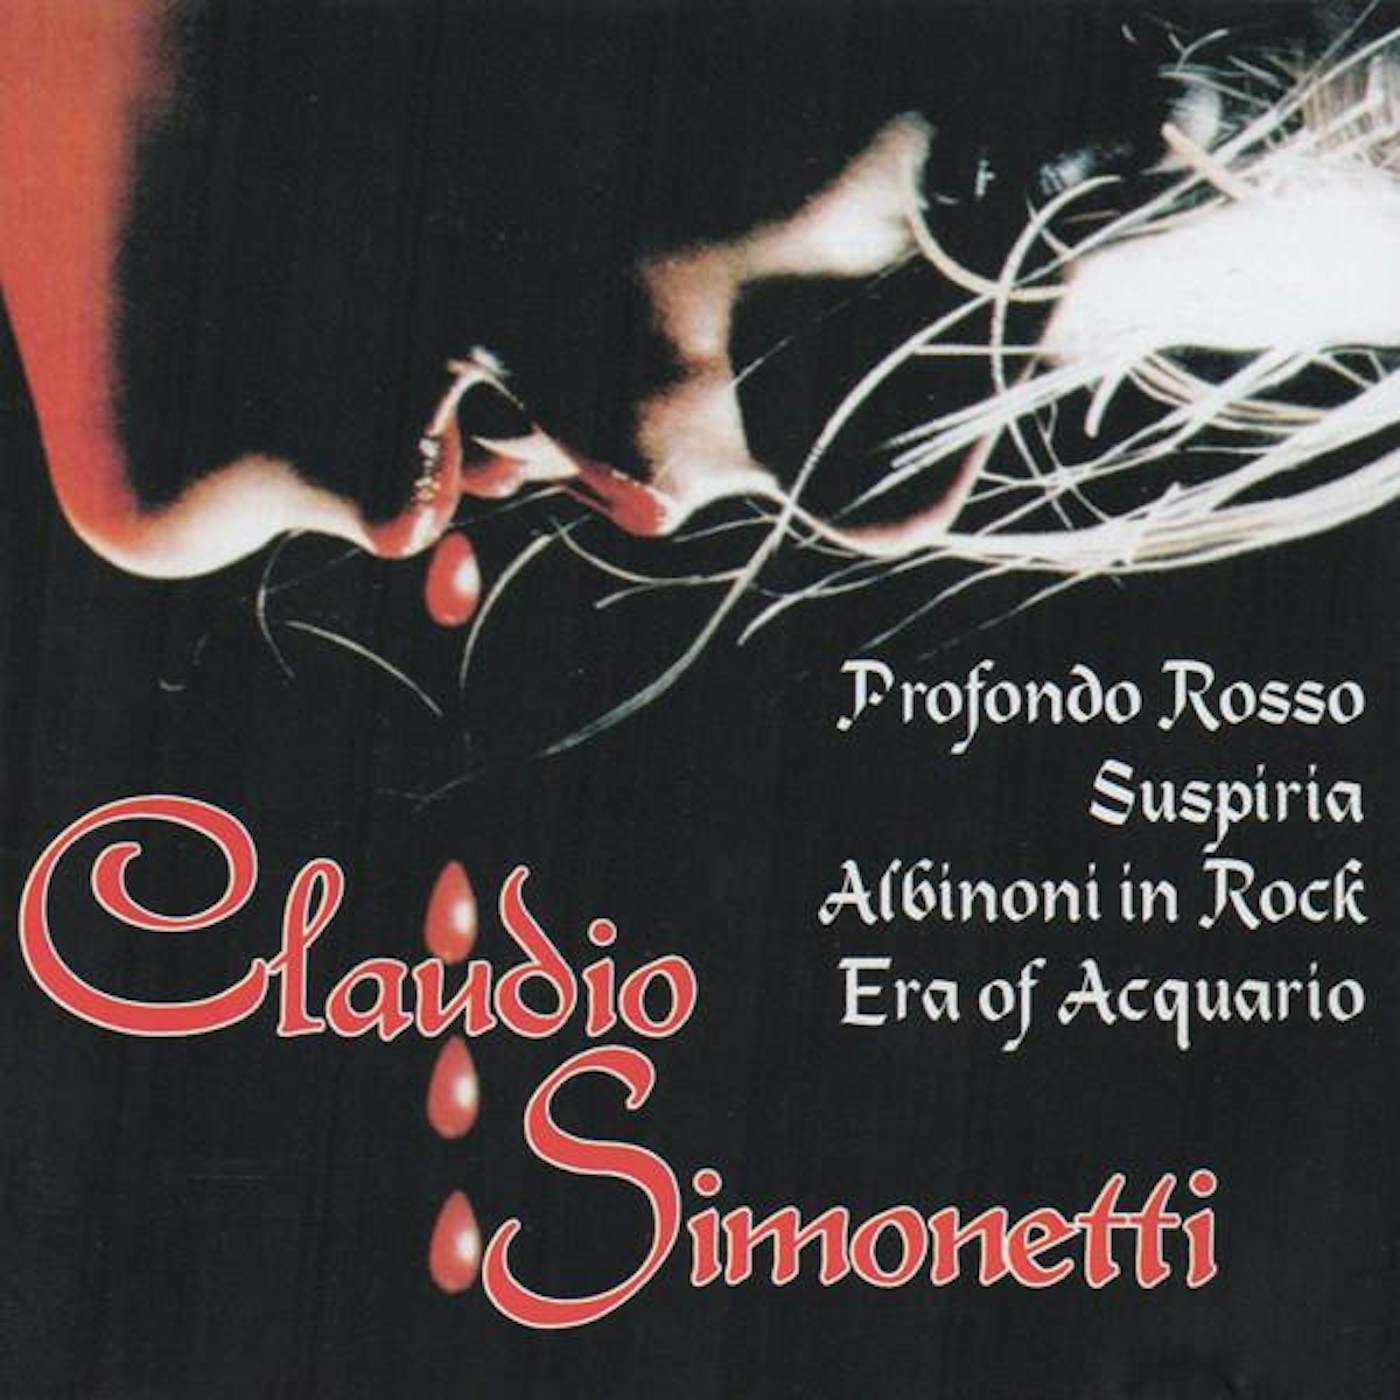 CLAUDIO SIMONETTI CD